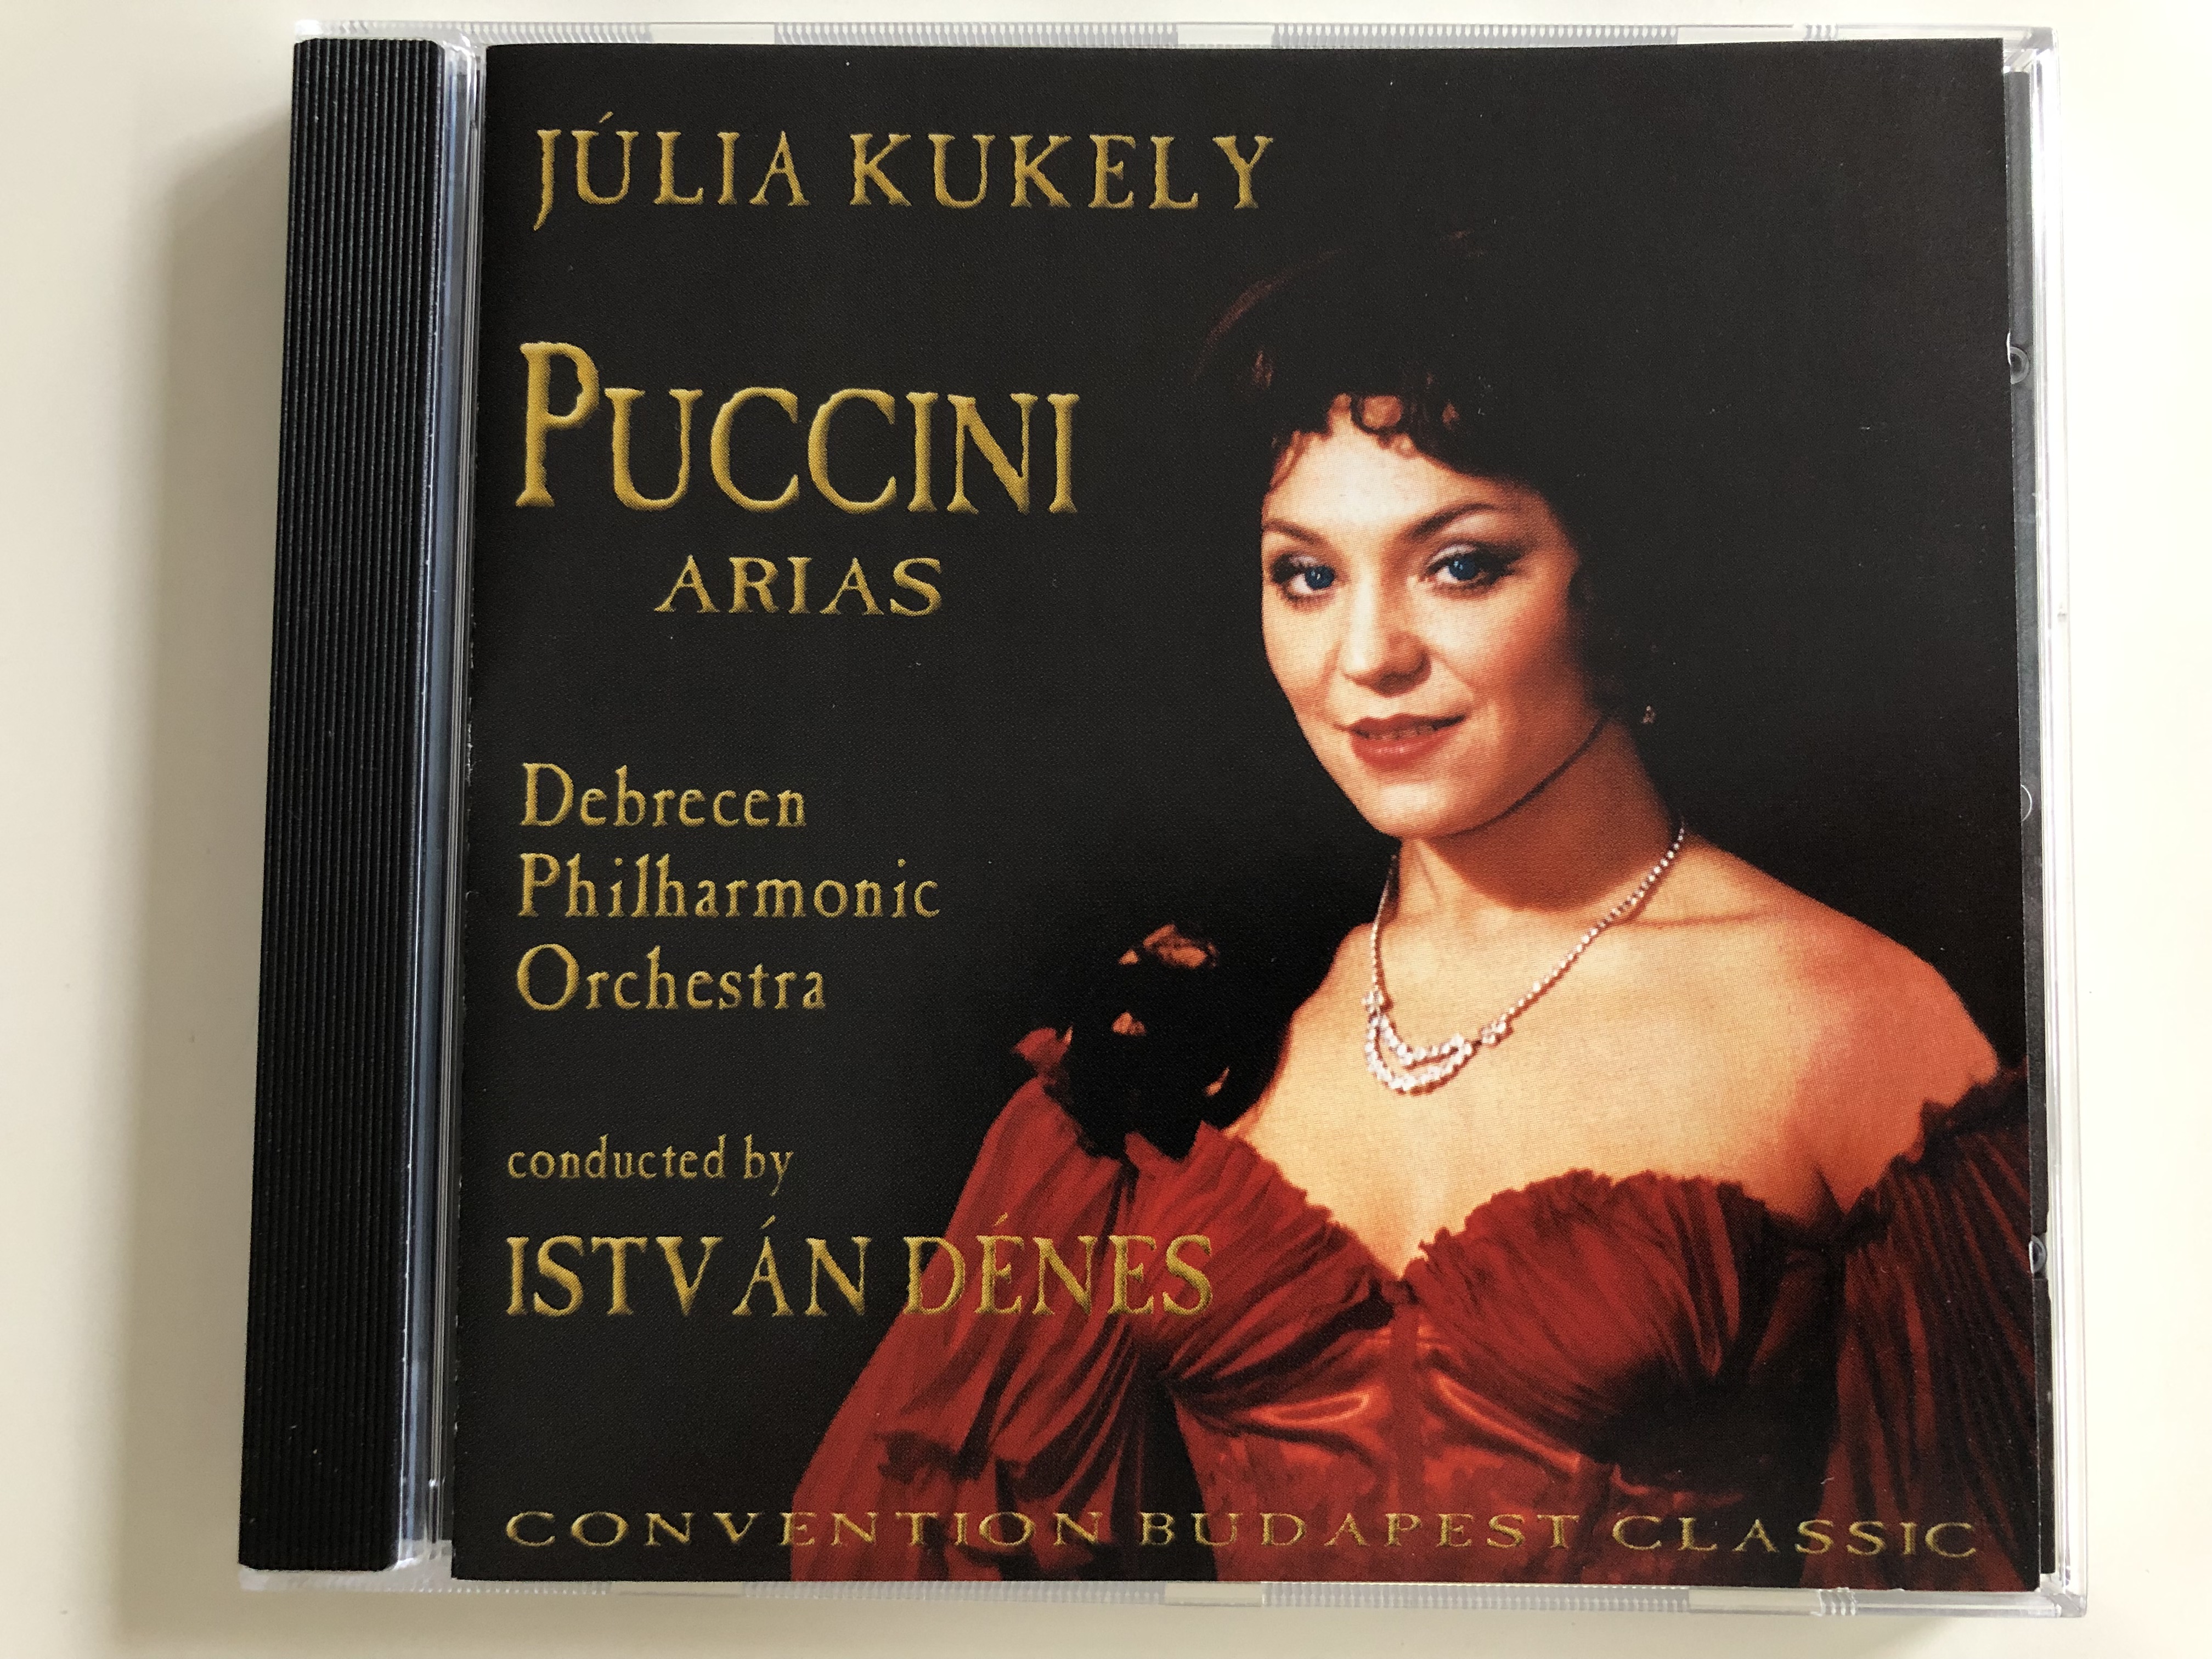 julia-kukely-puccini-arias-debrecen-philharmonic-orchestra-conducted-istvan-denes-convention-budapest-classic-1999-audio-cd-cbp-004-1-.jpg